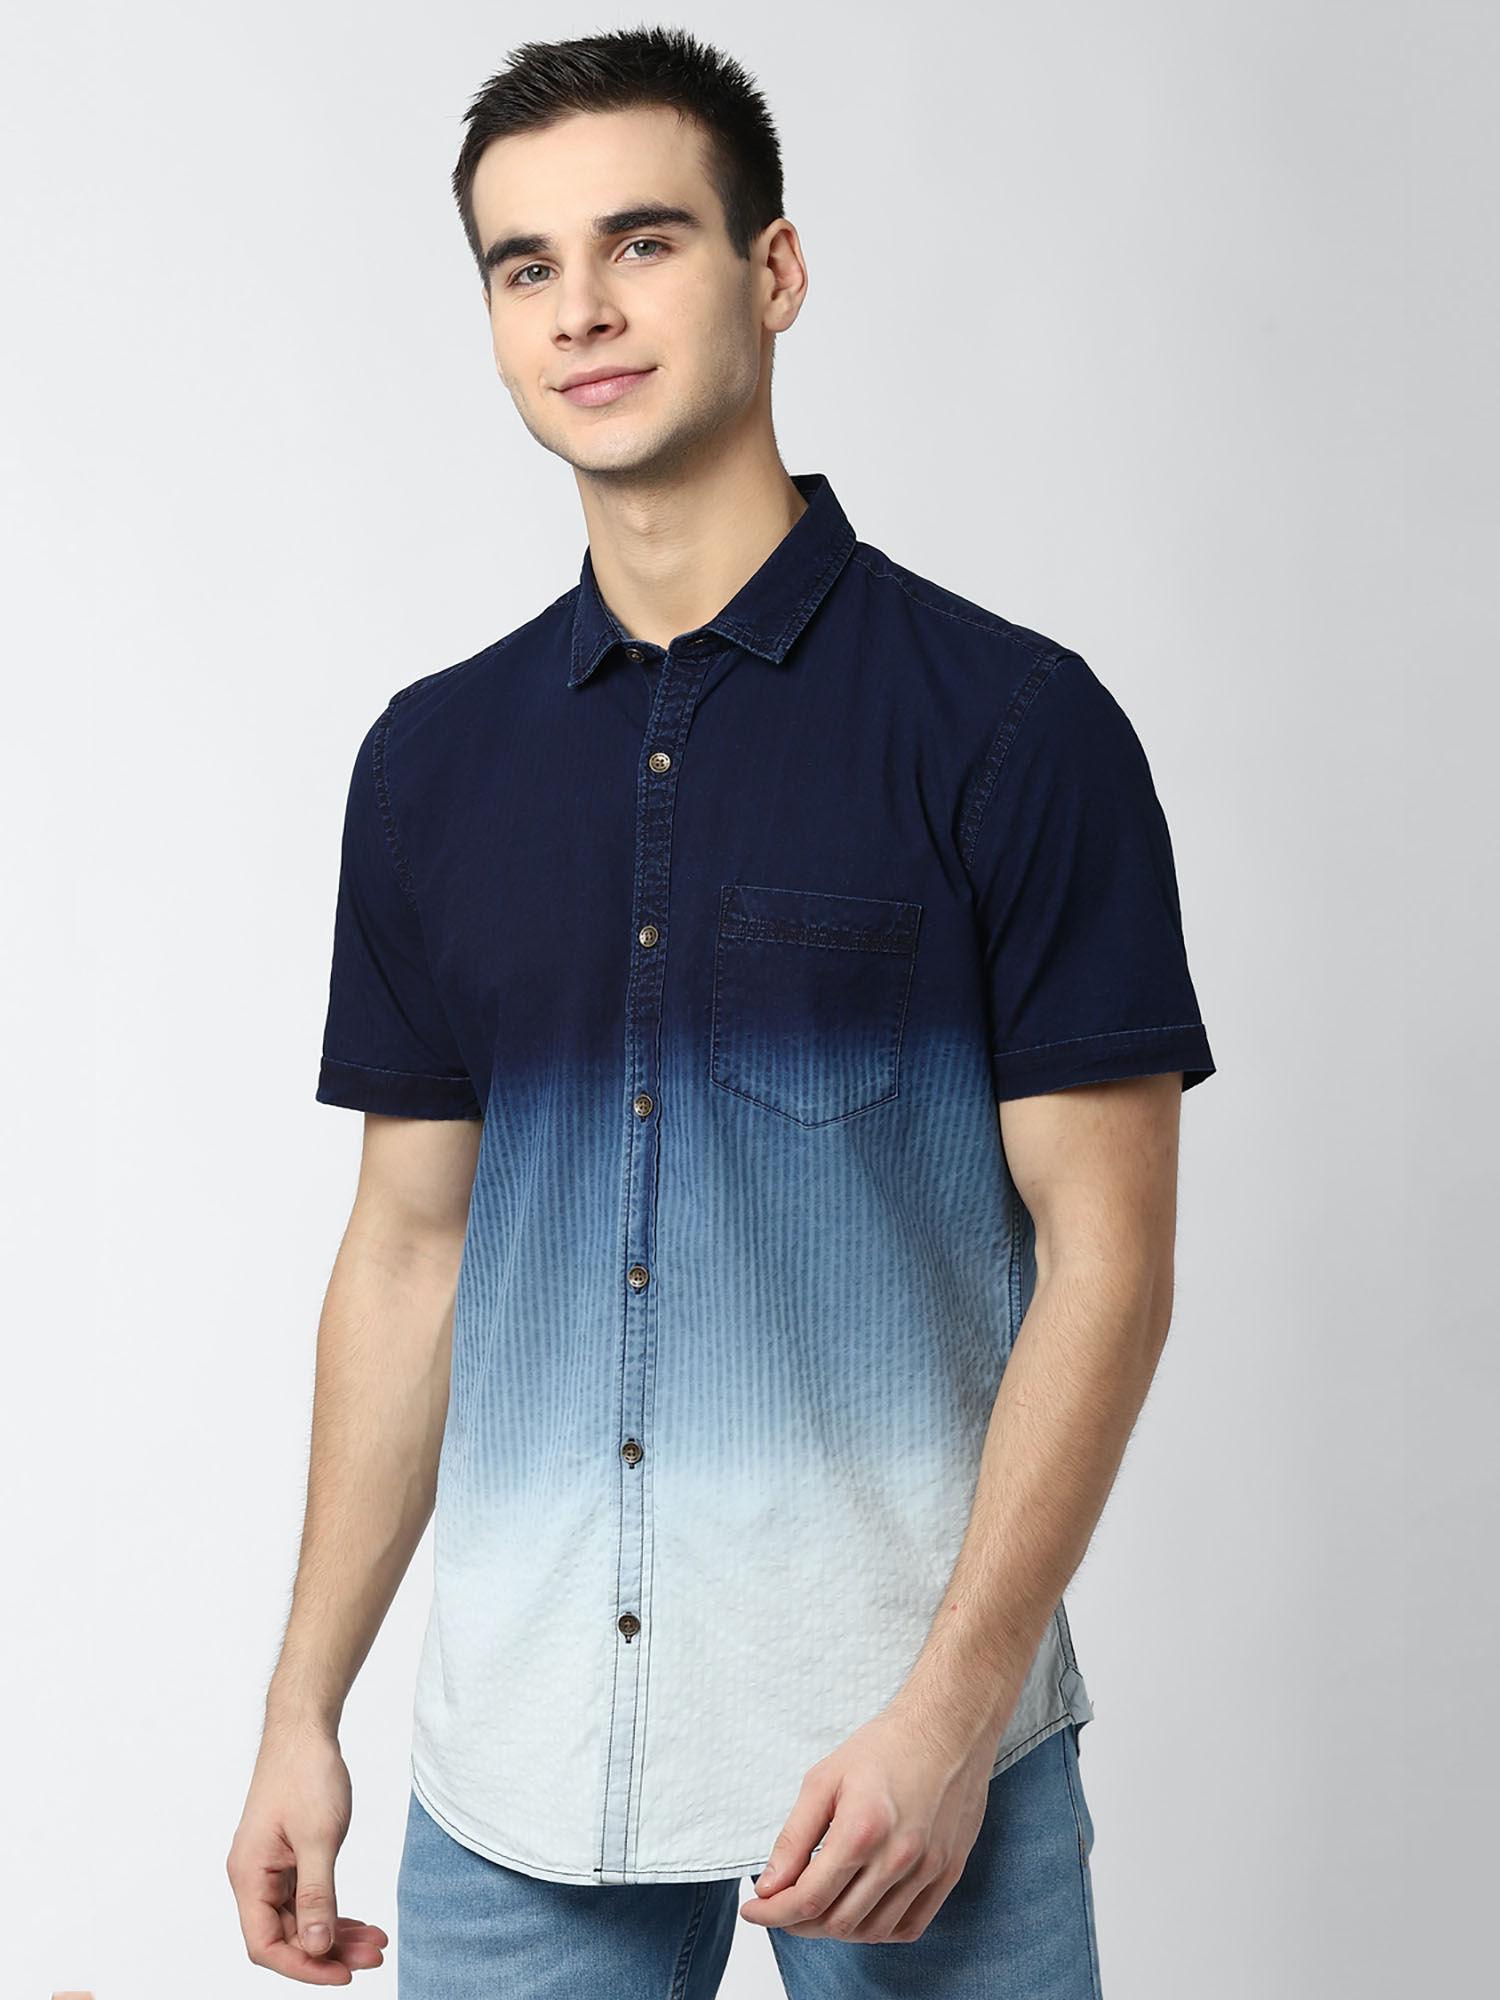 multi-color stripes printed half sleeves casual shirt